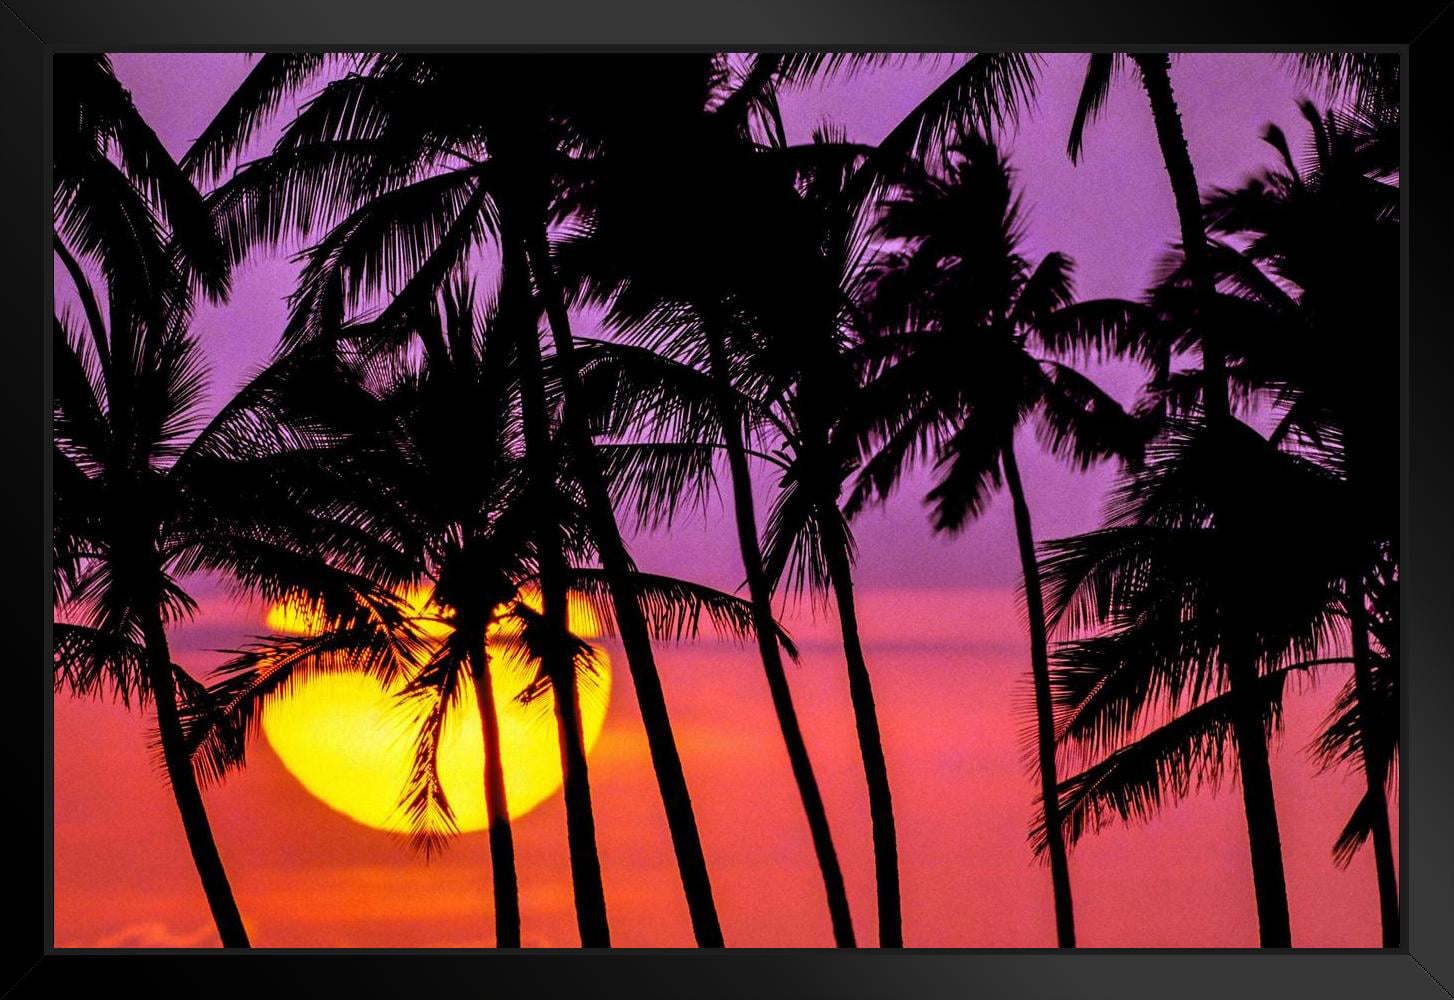 Sunset at Ala Moana Beach Park Oahu Hawaii Photo Art Print Poster 18x12 inch